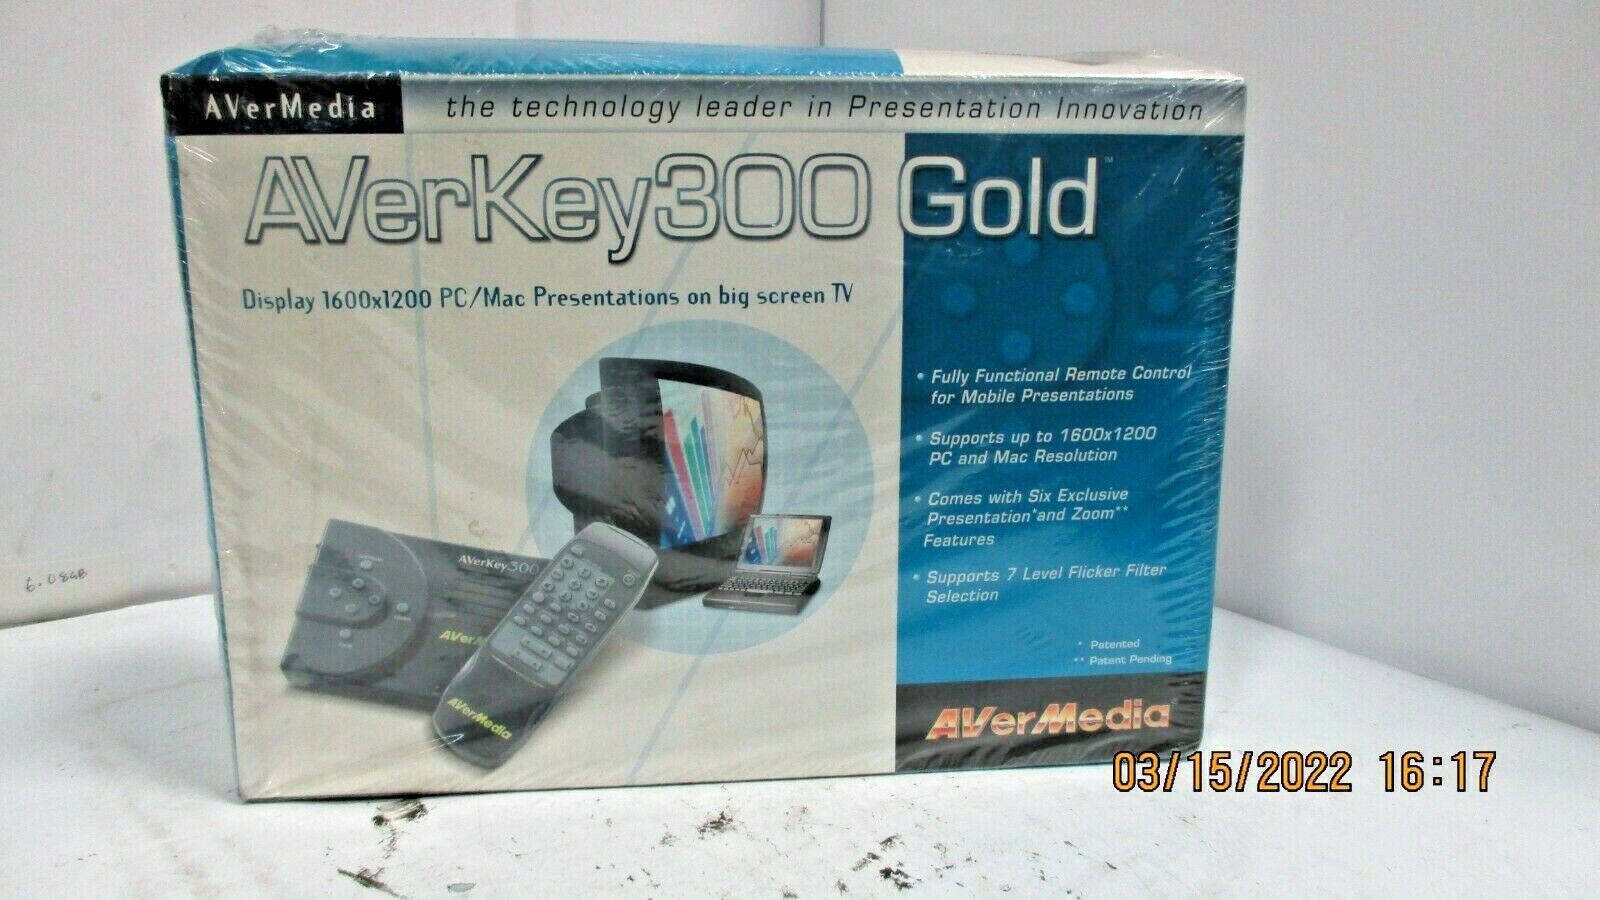 Avermedia Averkey300 Gold 1600 X 1200 PC/MAC PRESENTATIONS ON BIG SCREEN TV 